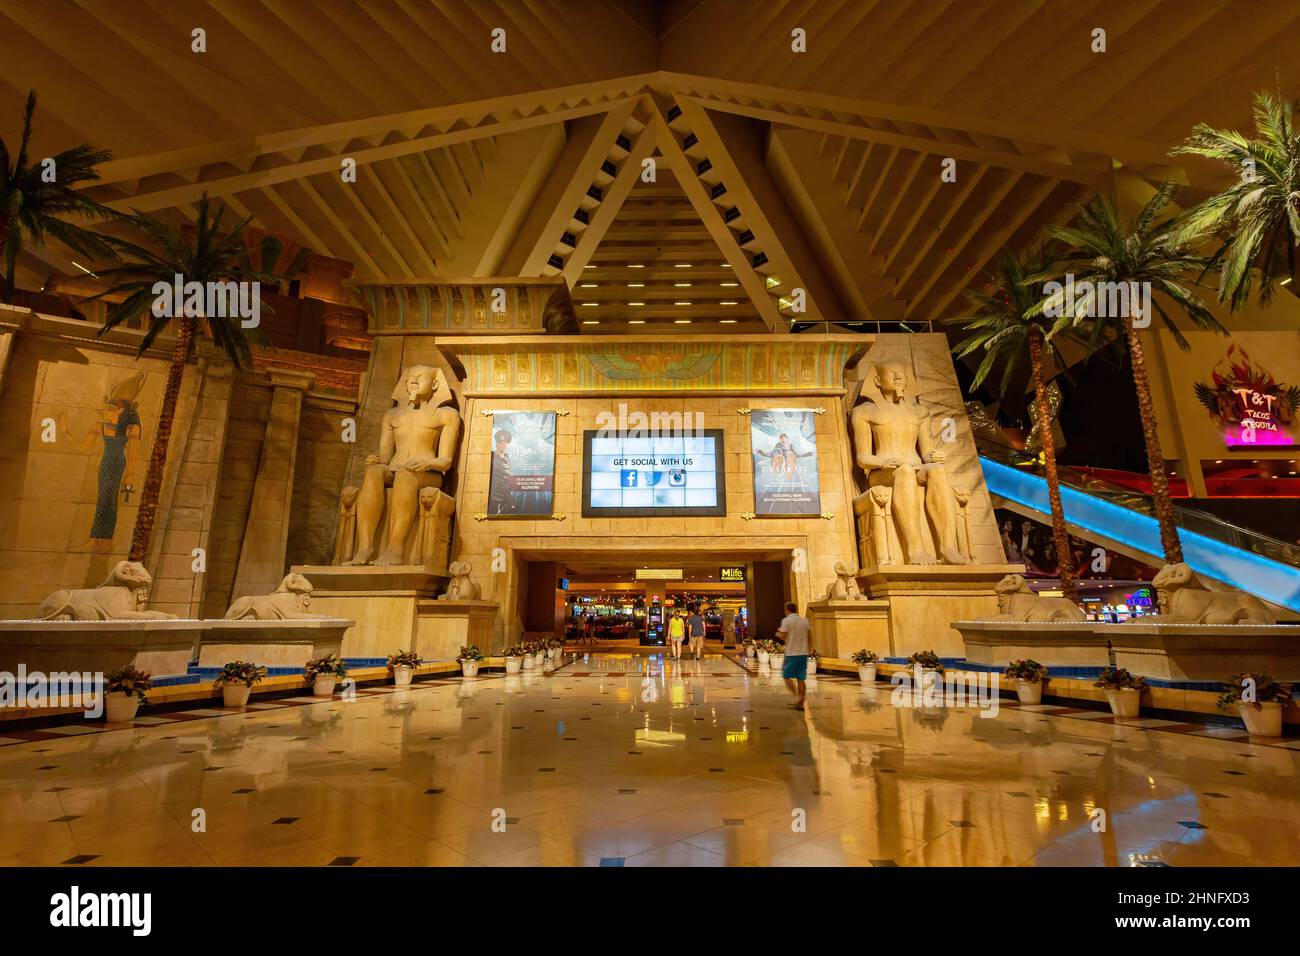 Las Vegas, AUG 6 2015 - Interior view of the Luxor Hotel and Casino ...